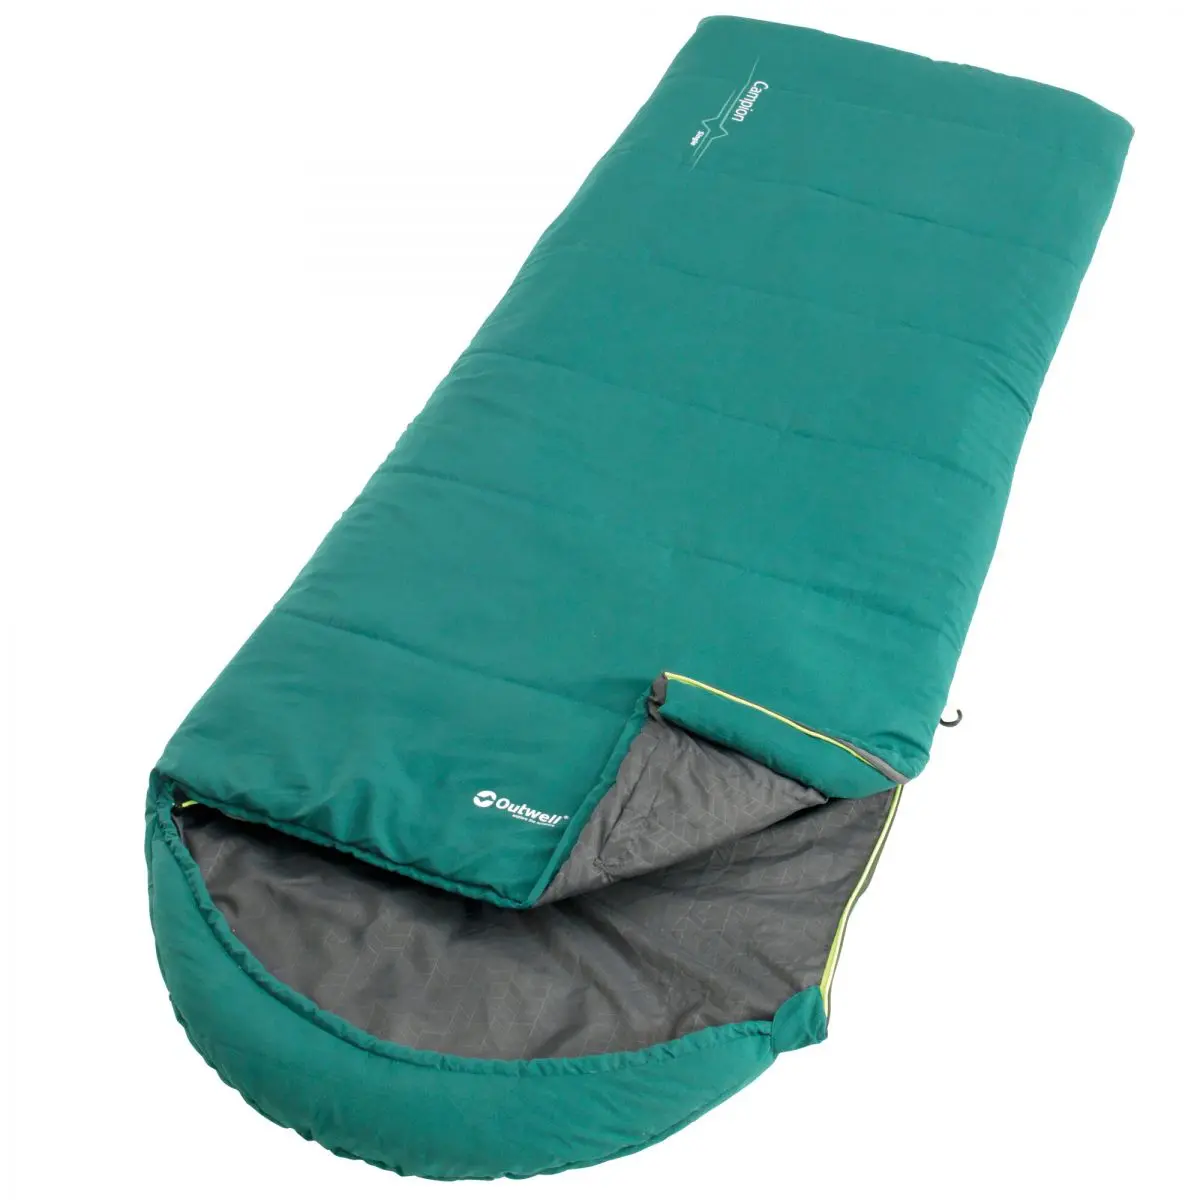 Dekový spací vak Campion - 215 x 80 cm, zelený